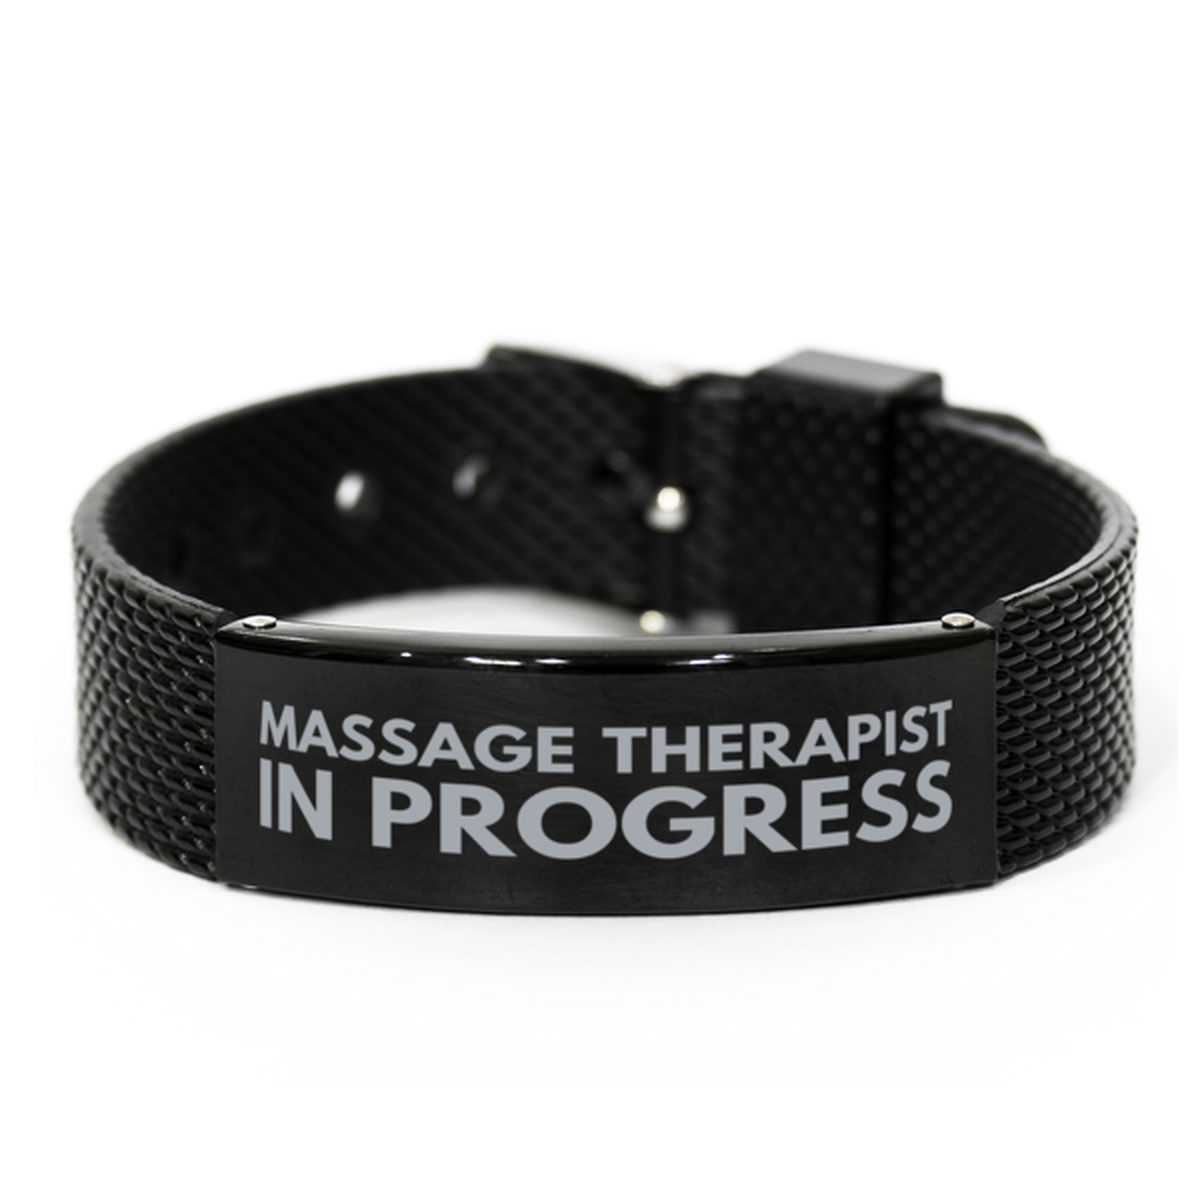 Inspirational Massage Therapist Black Shark Mesh Bracelet, Massage Therapist In Progress, Best Graduation Gifts for Students